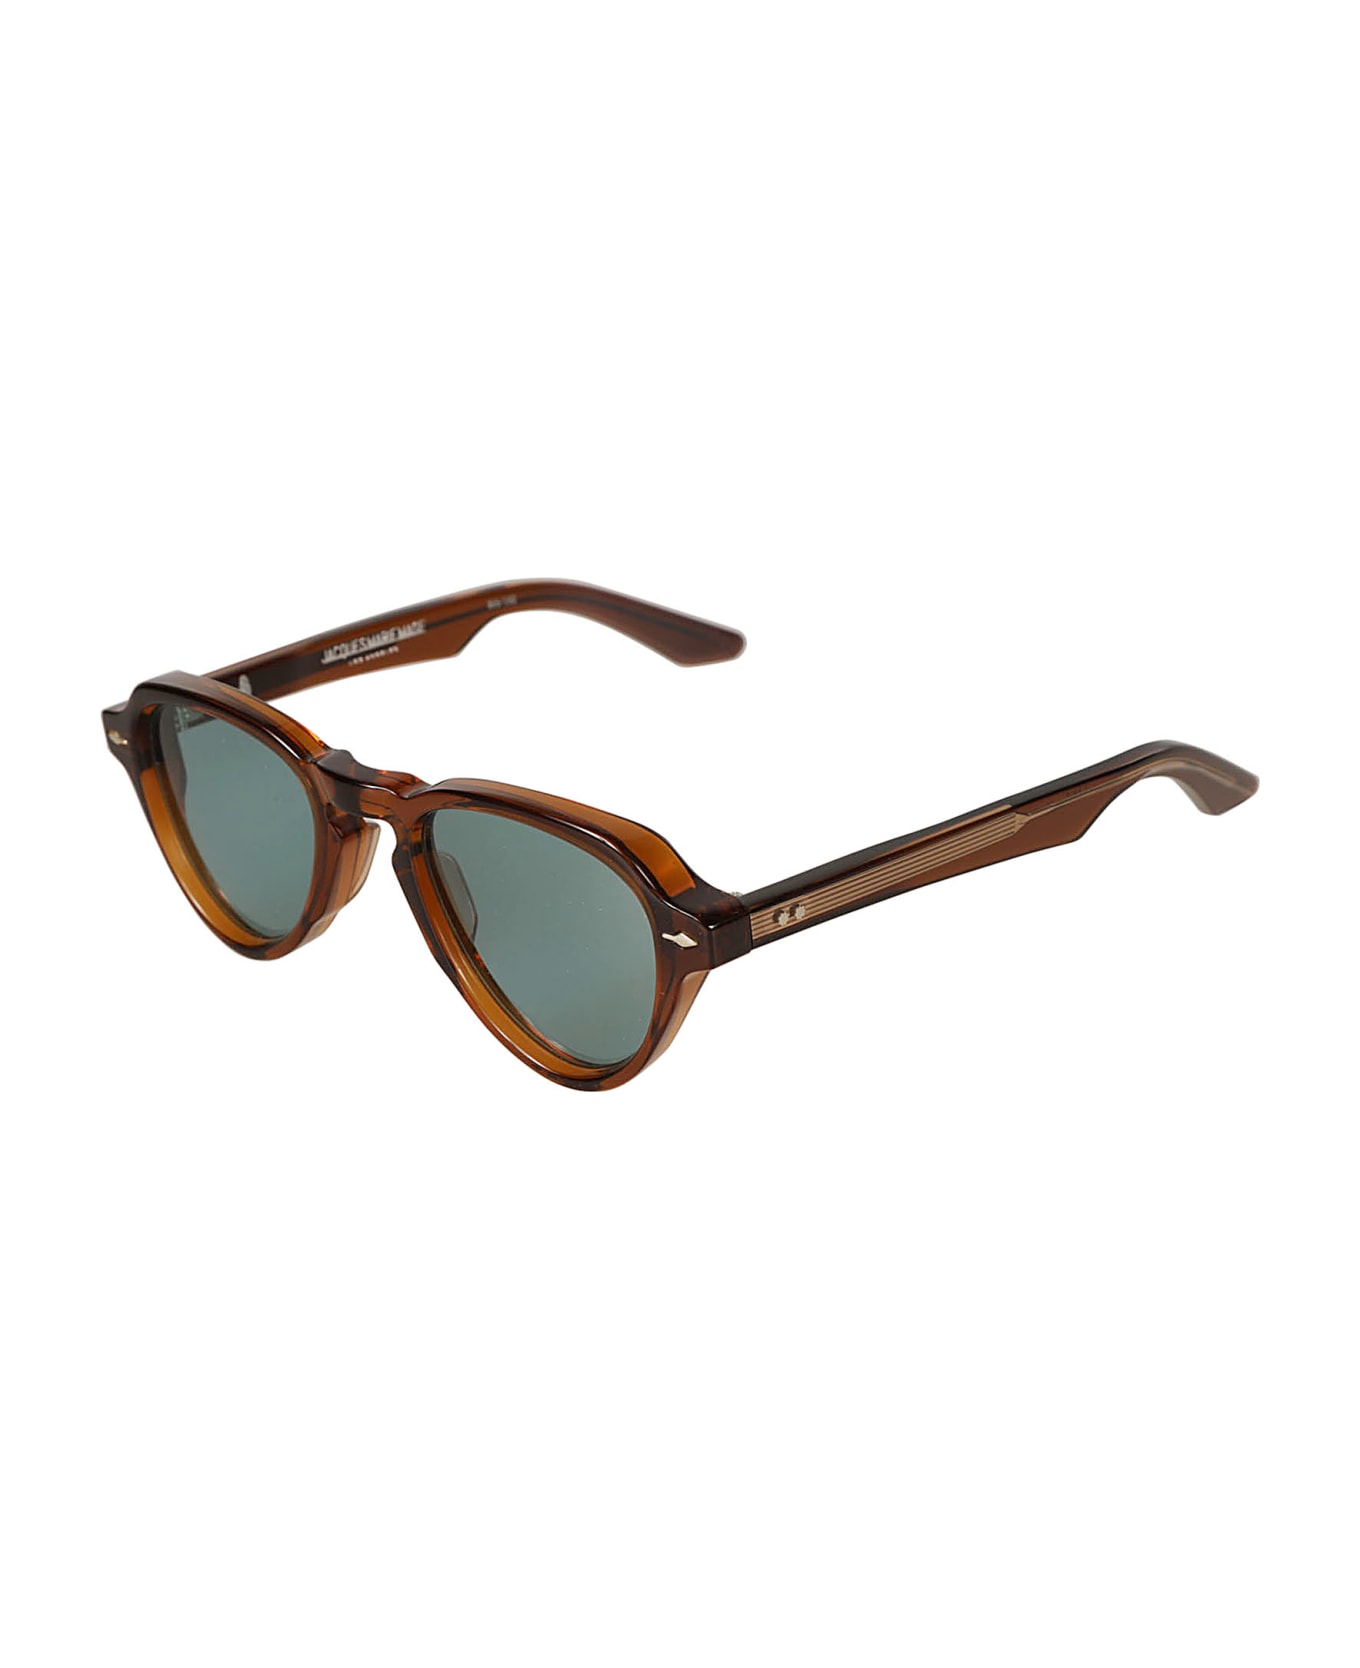 Jacques Marie Mage Hickory Sunglasses Sunglasses - marrone-oro